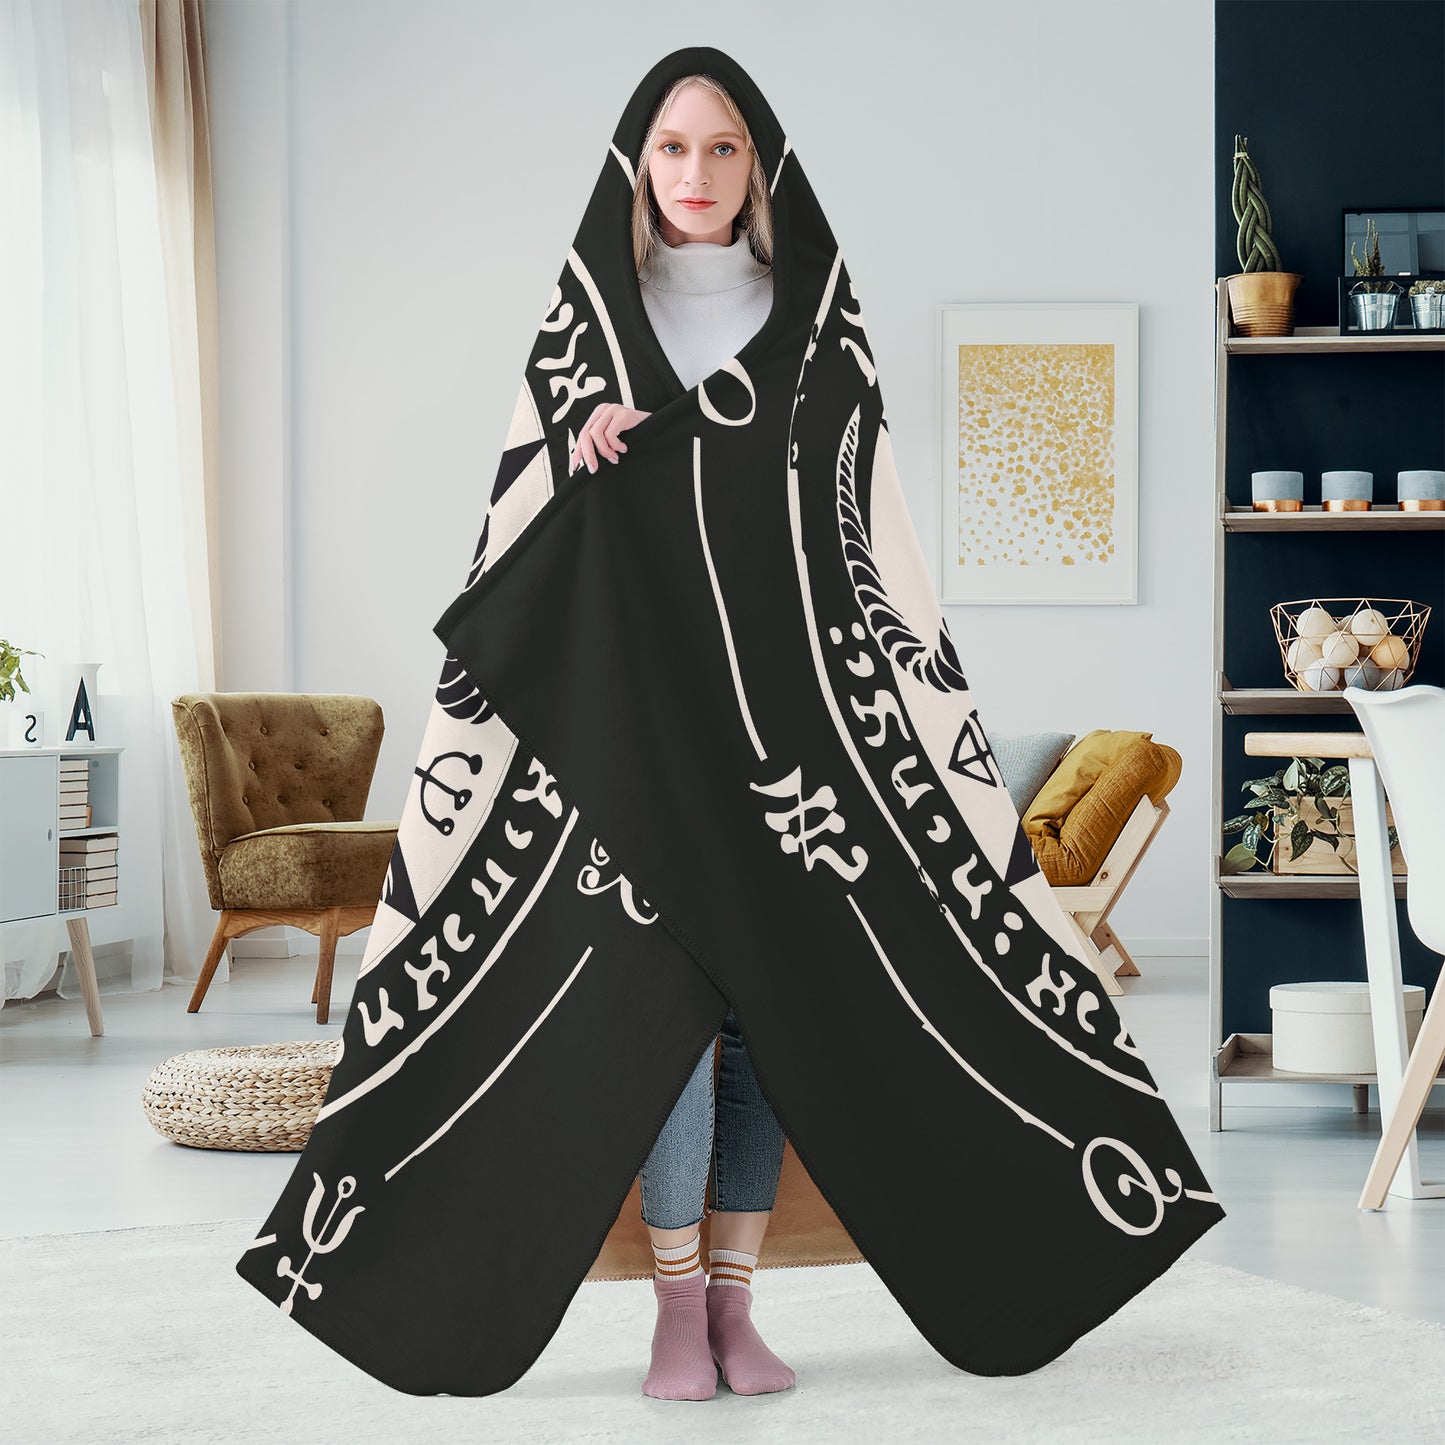 Baphomet Hooded Blanket, Satanic Goat Home Decor